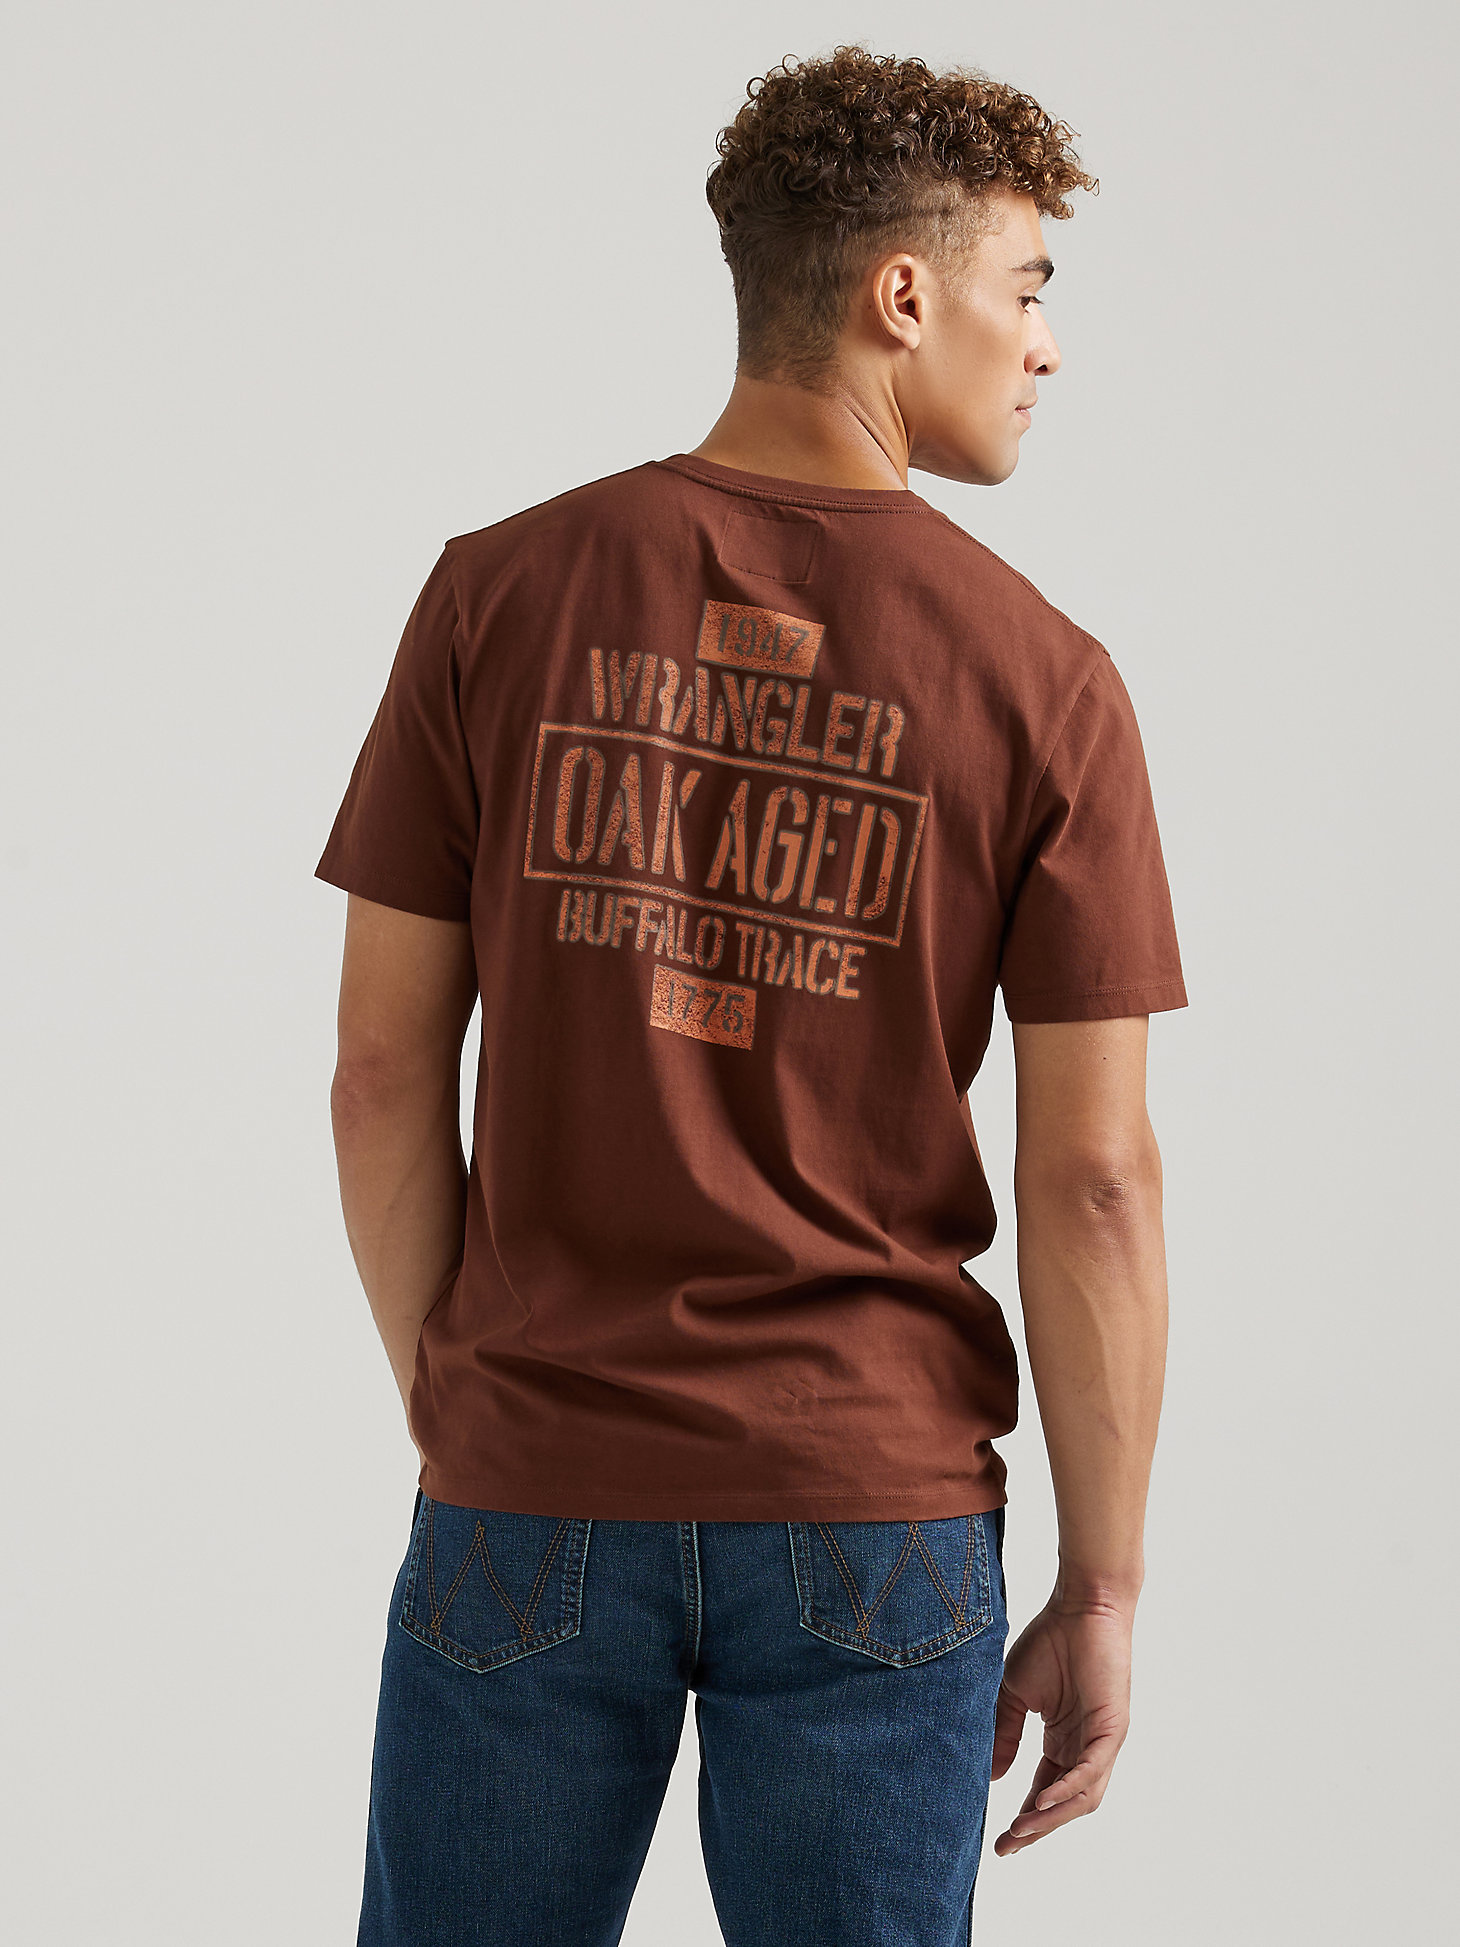 Wrangler x Buffalo Trace™ Men's Oak Aged T-Shirt in Brown Grains main view